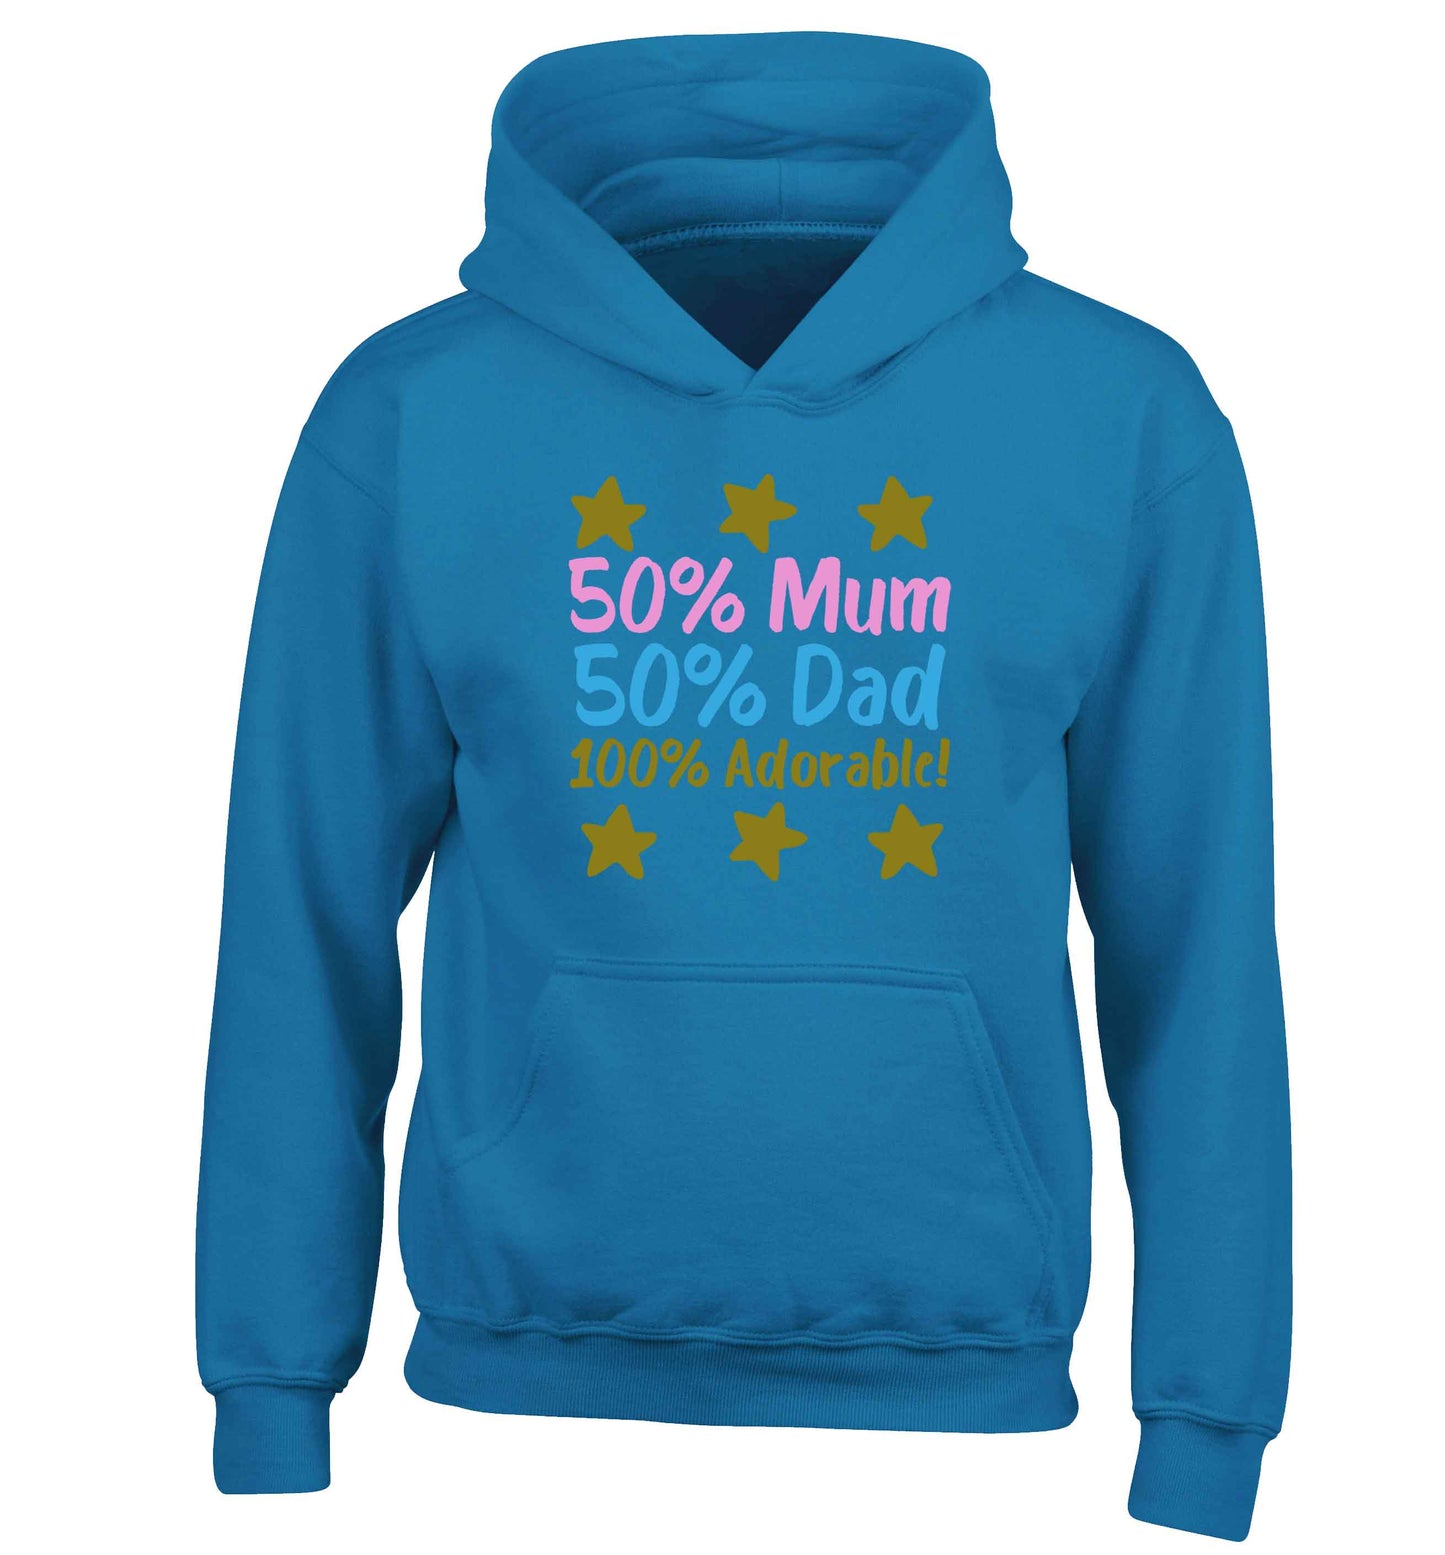 50% mum 50% dad 100% adorable children's blue hoodie 12-13 Years